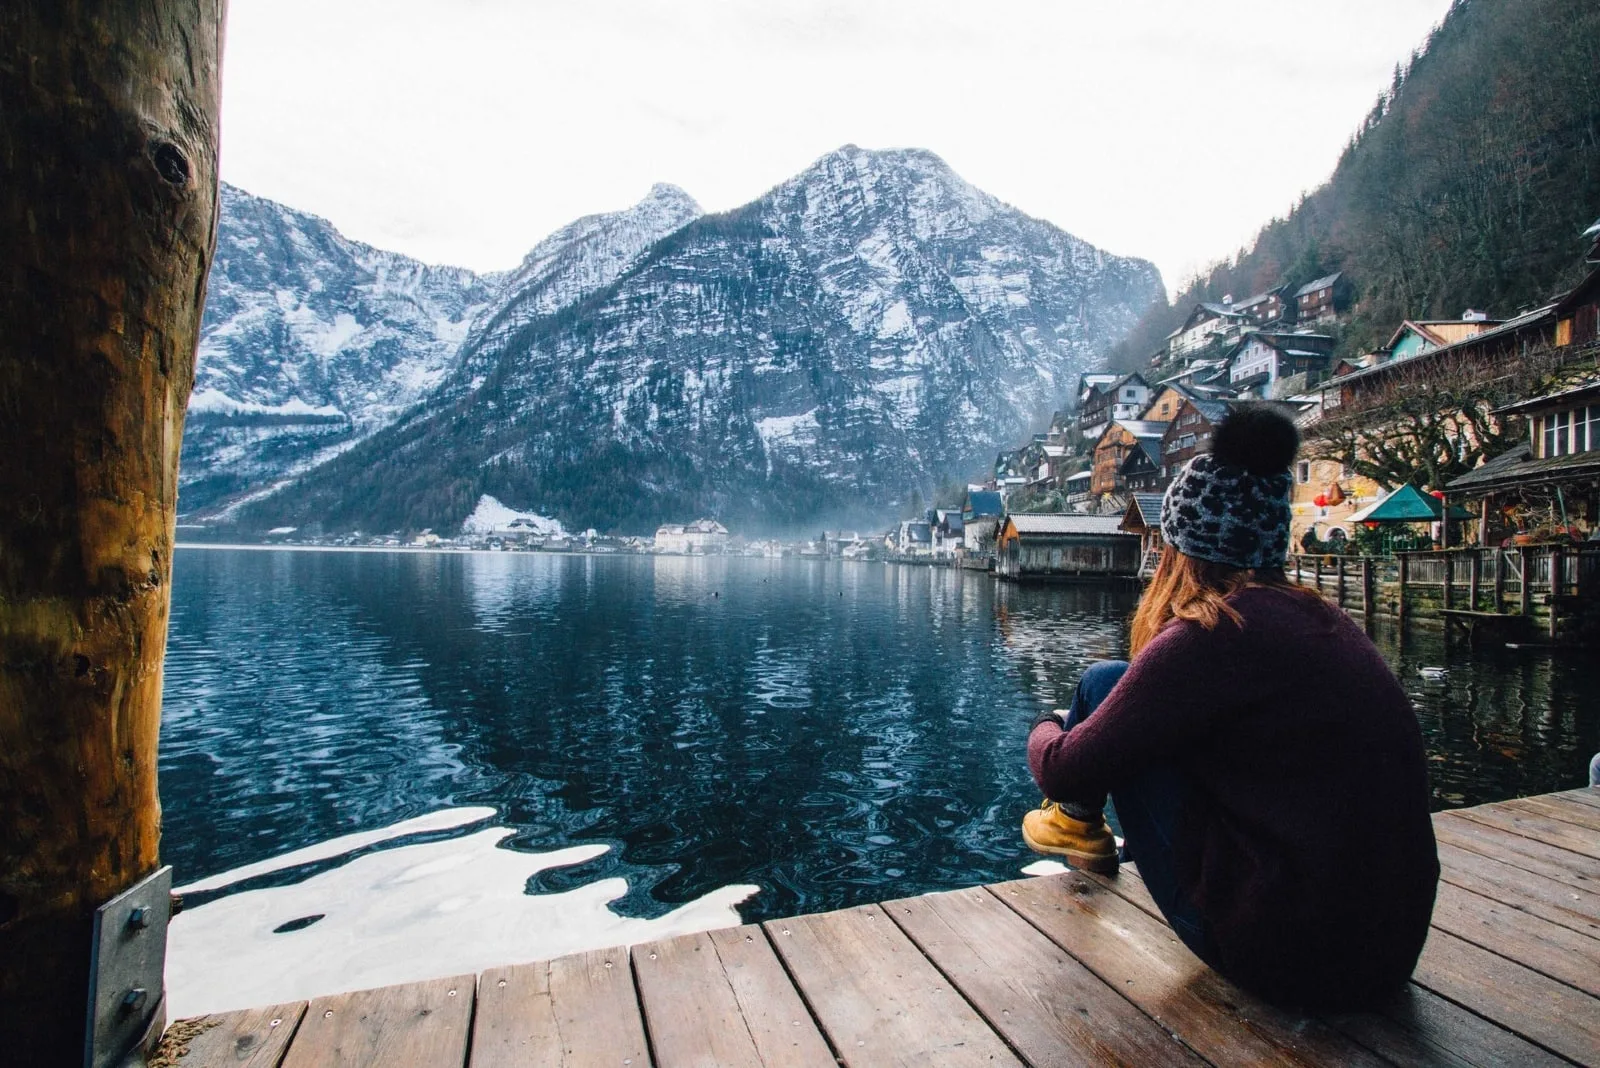 woman sitting on dock looking at lake